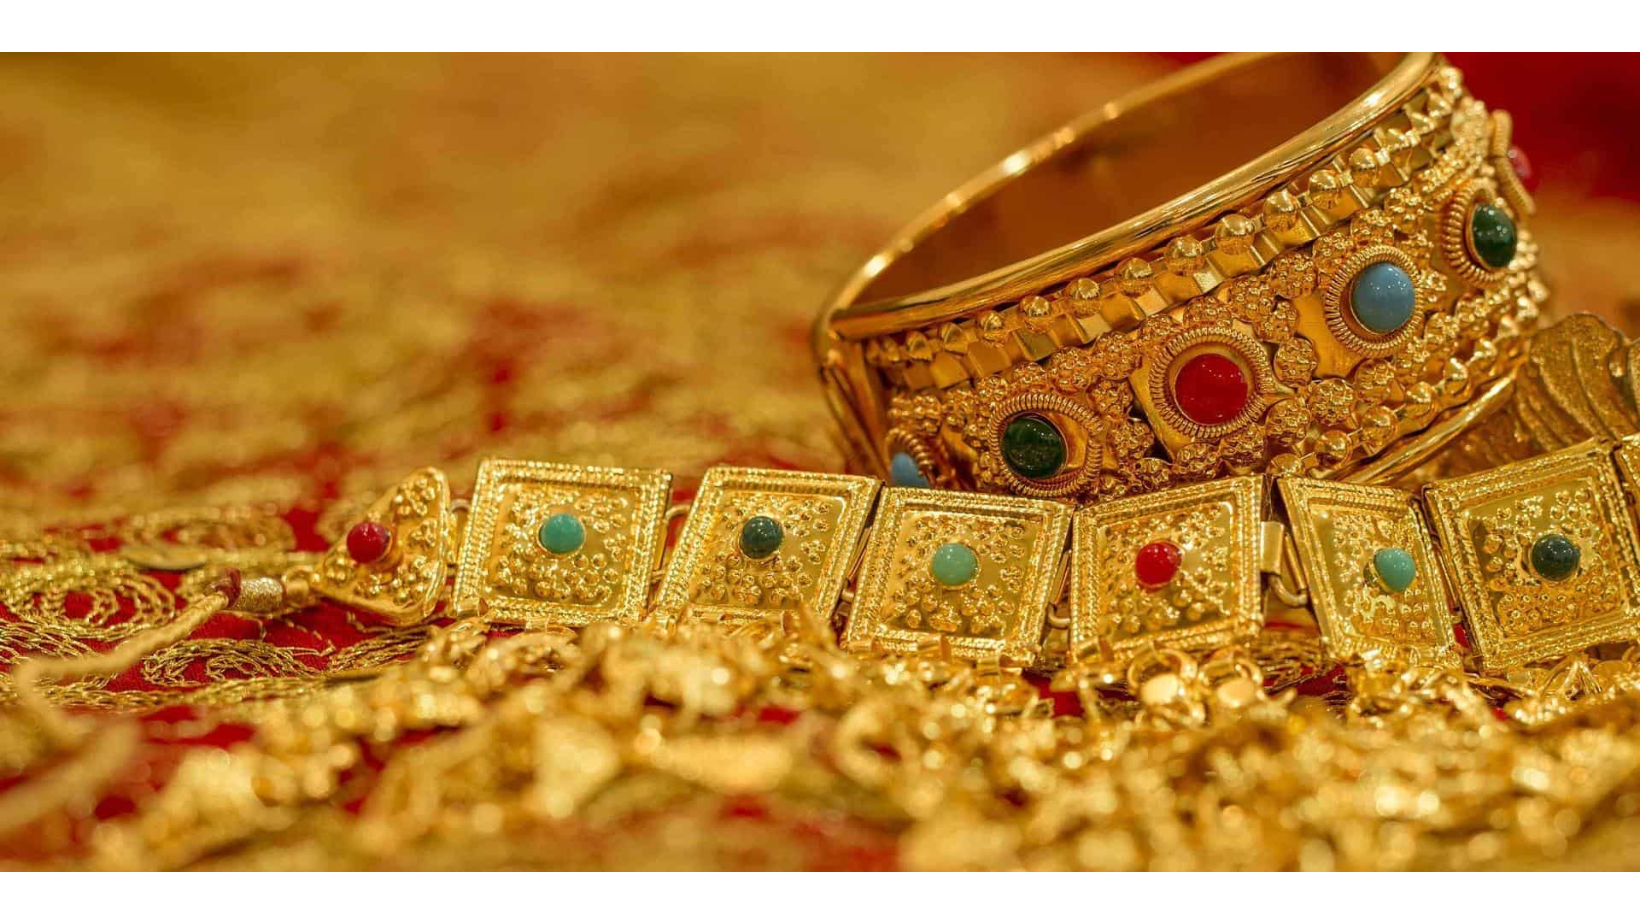 Manama Gold festival, Souq Al Manama, gold trail, Bahrain, traditional marketplace, glittering prize, dazzling jewelry